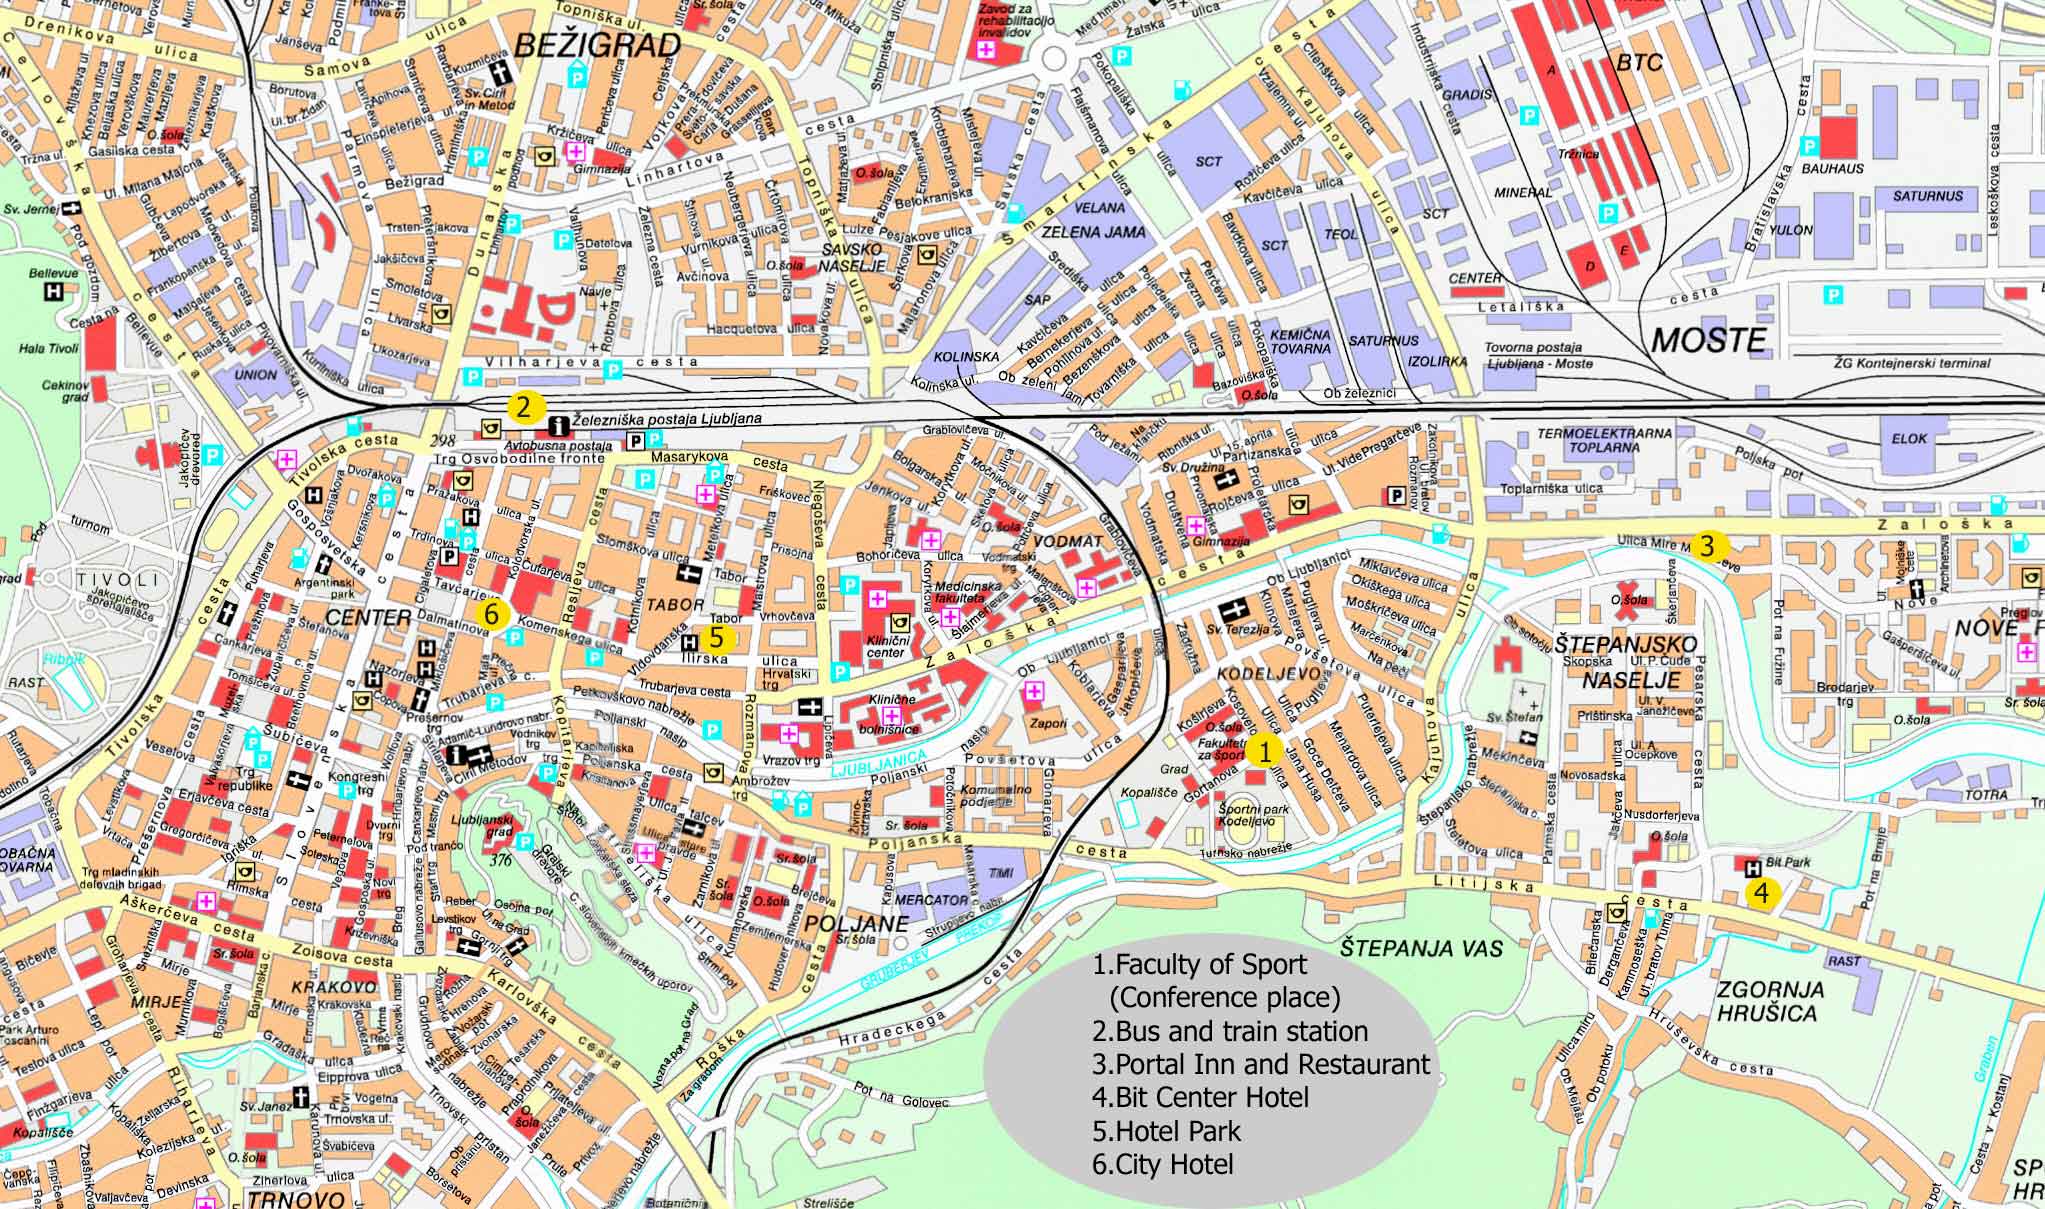 fakulteti u zagrebu karta Large Ljubljana Maps for Free Download and Print | High Resolution  fakulteti u zagrebu karta